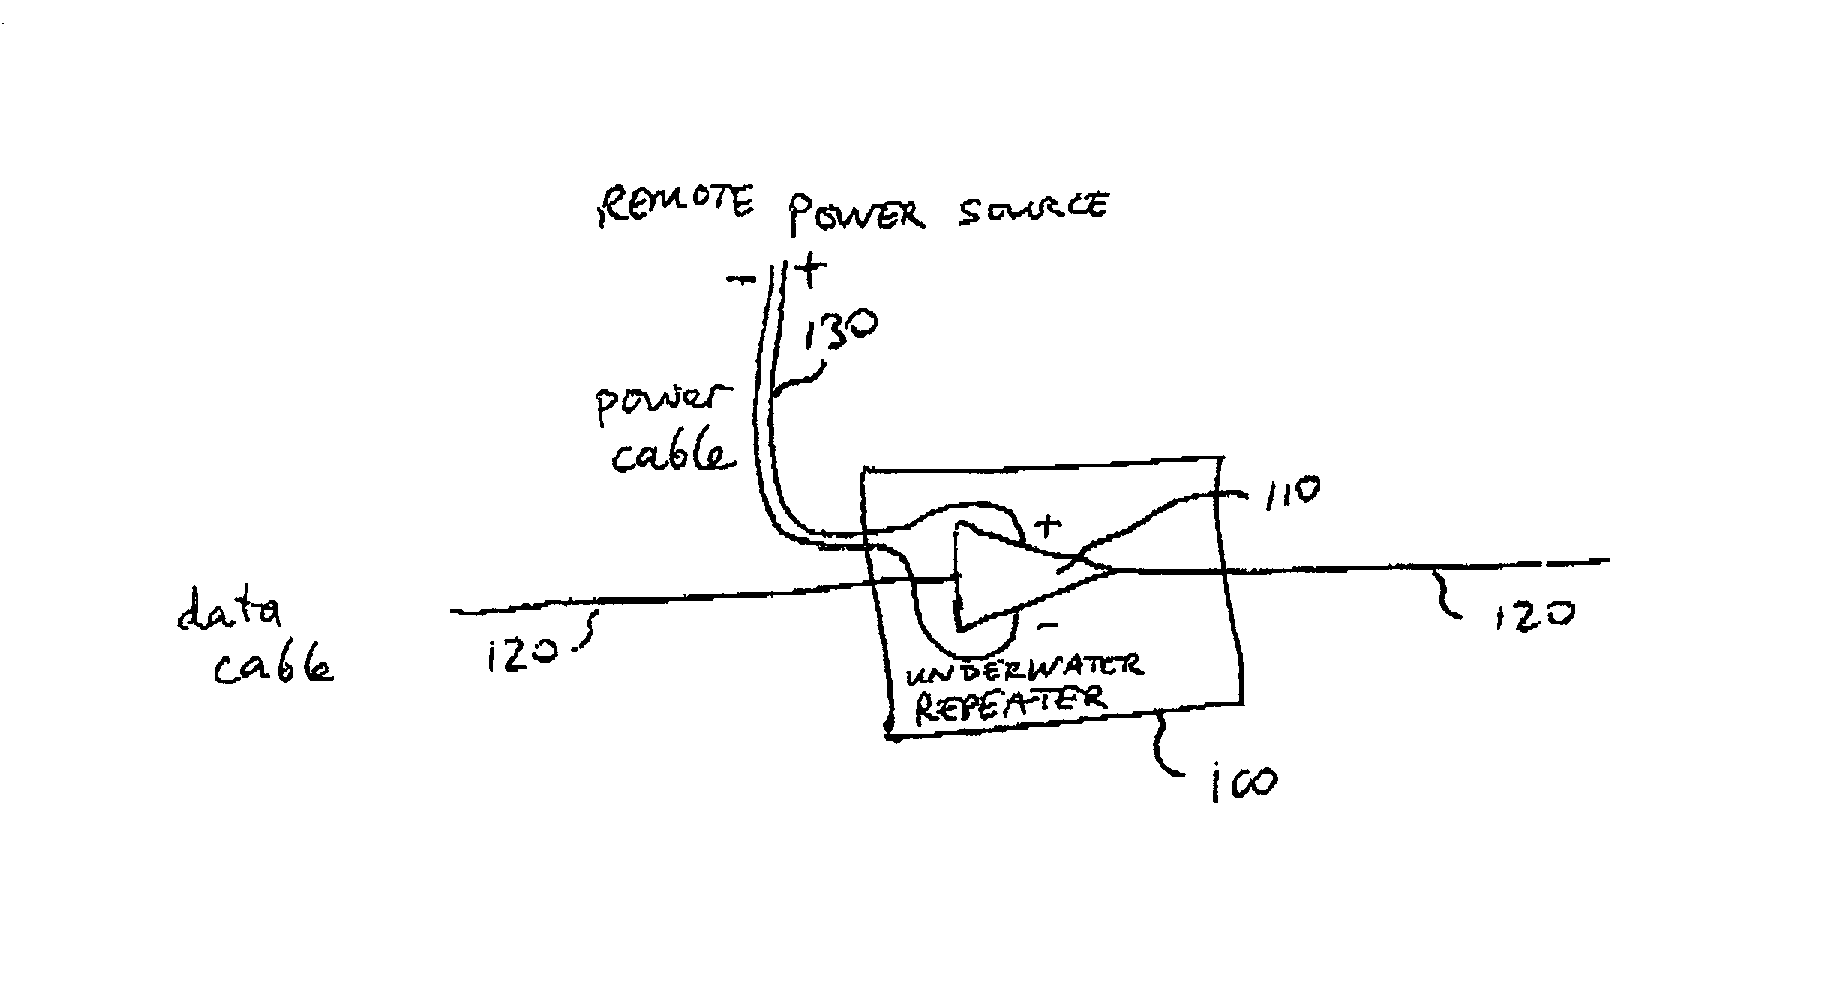 Telecommunications system power supply